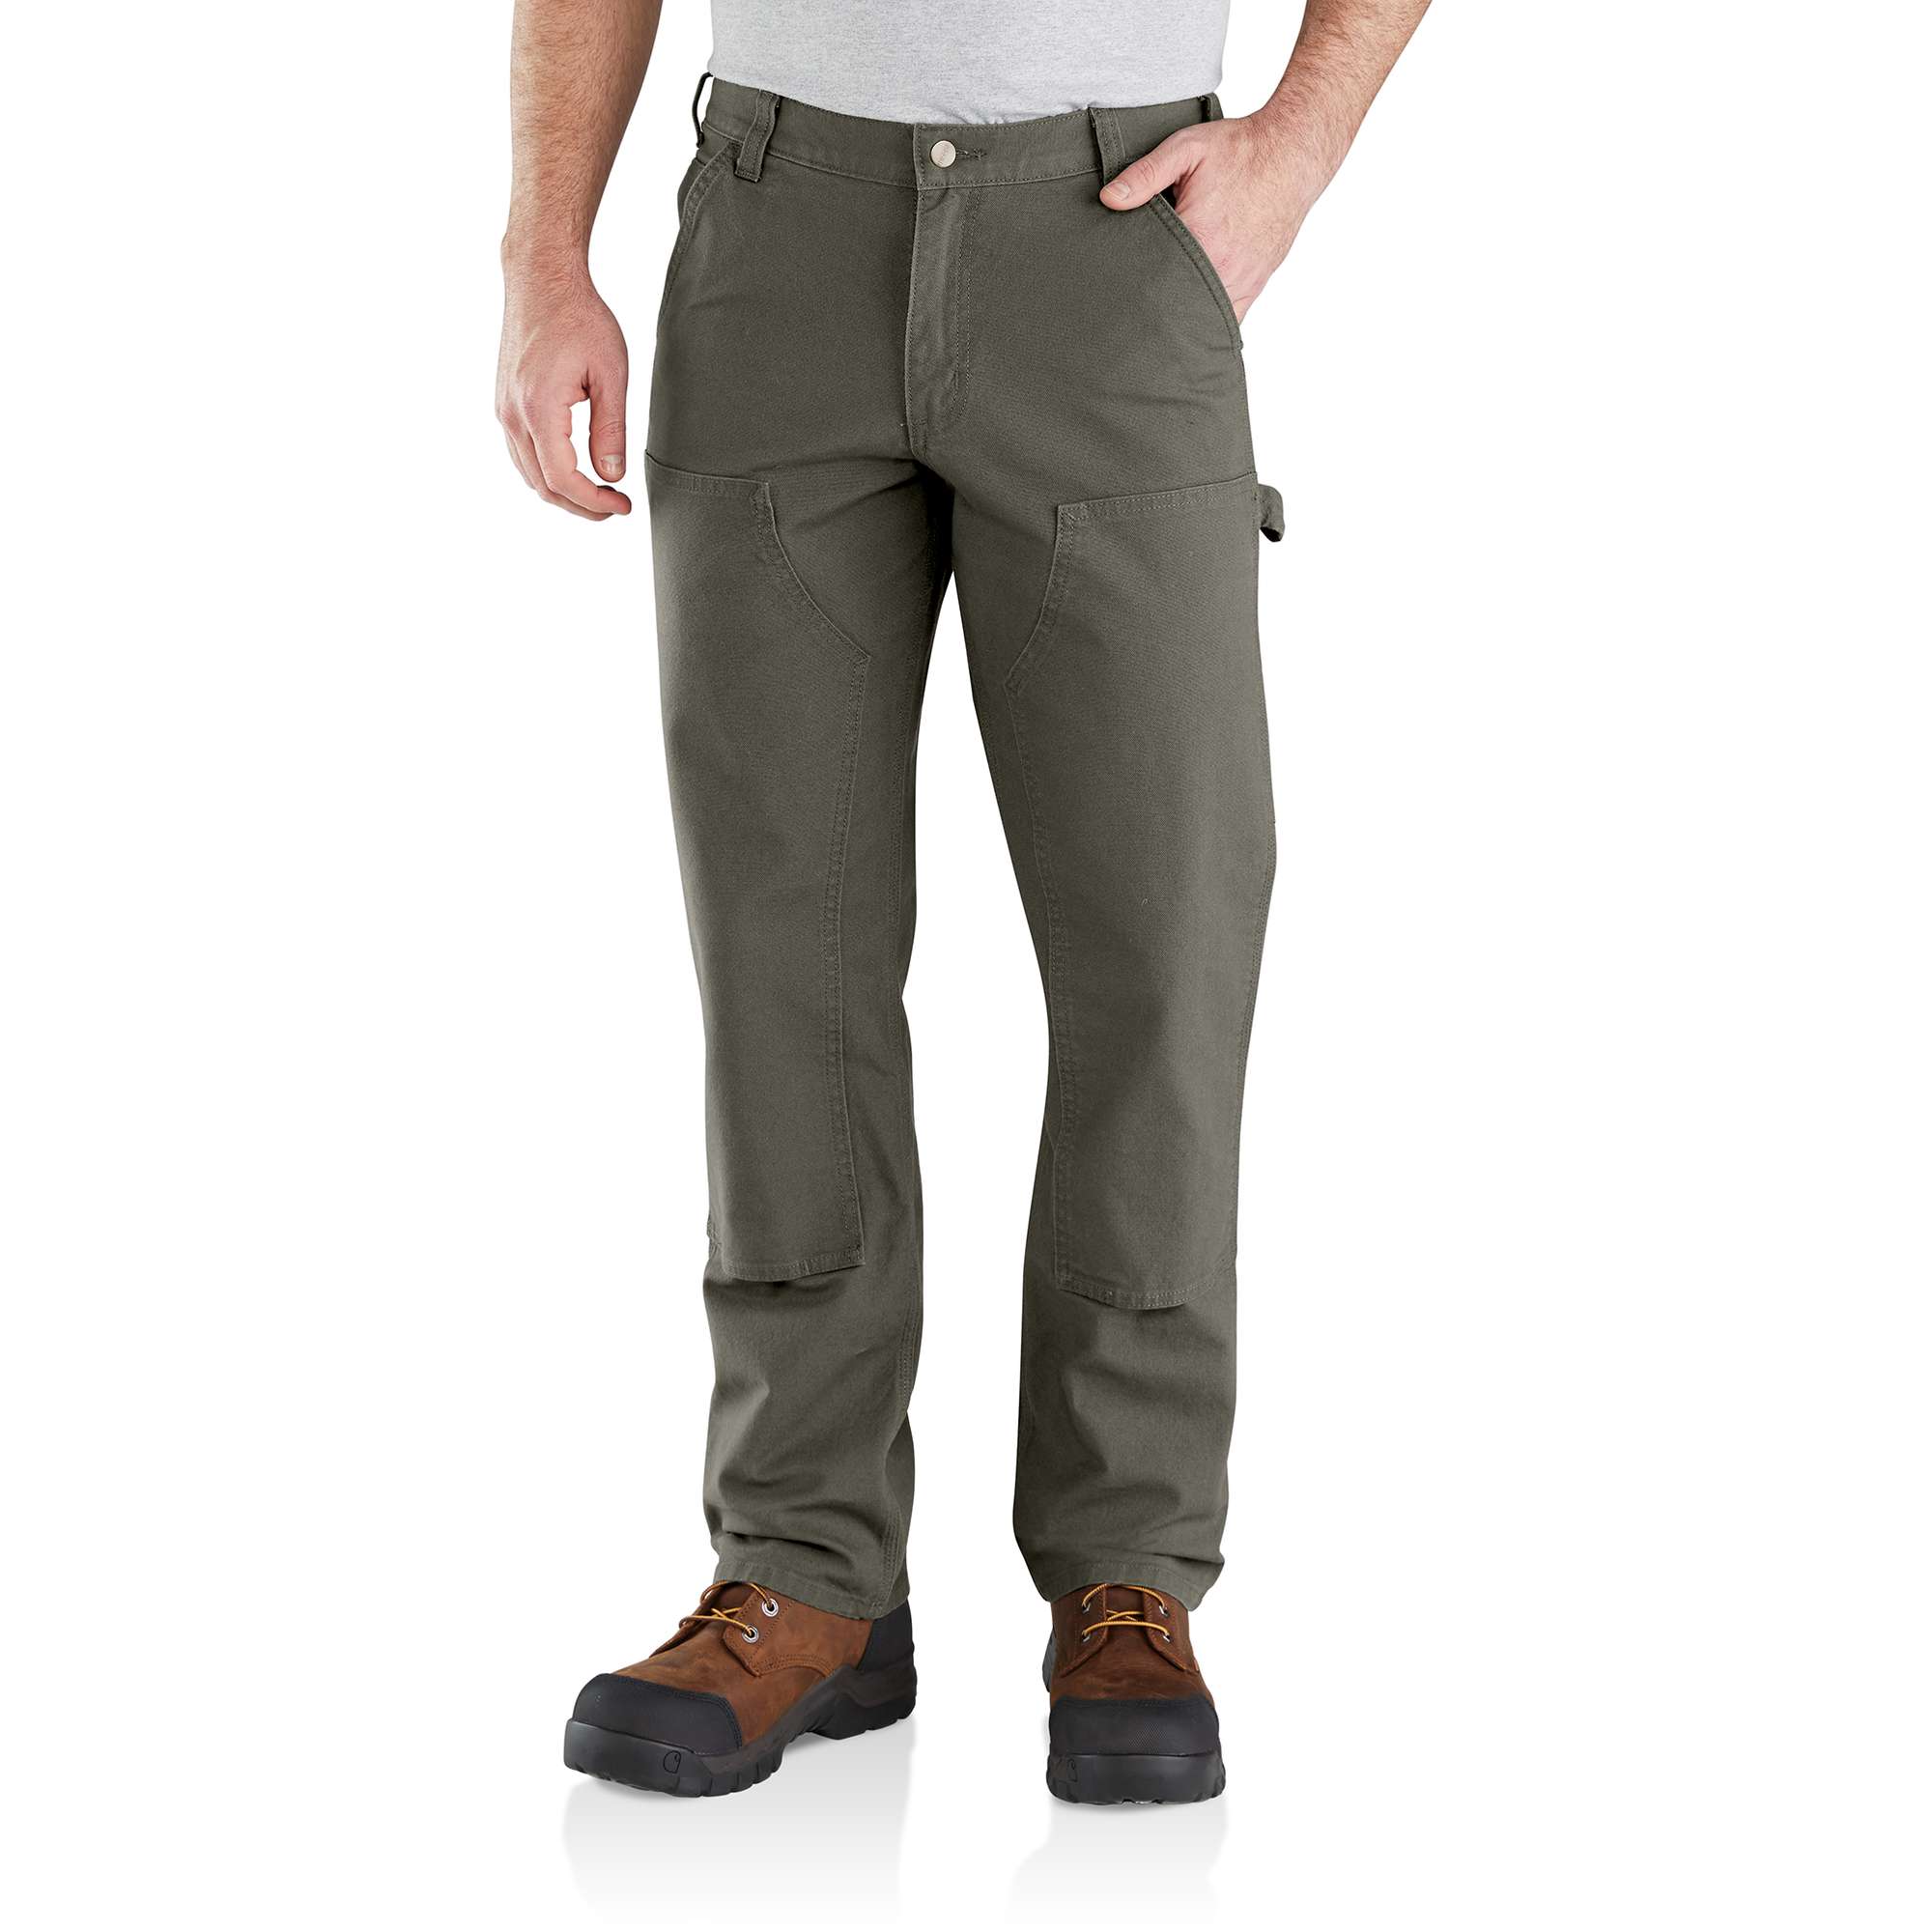 Lowes Charcoal Fleece Skinny Trackpants - Lowes Menswear